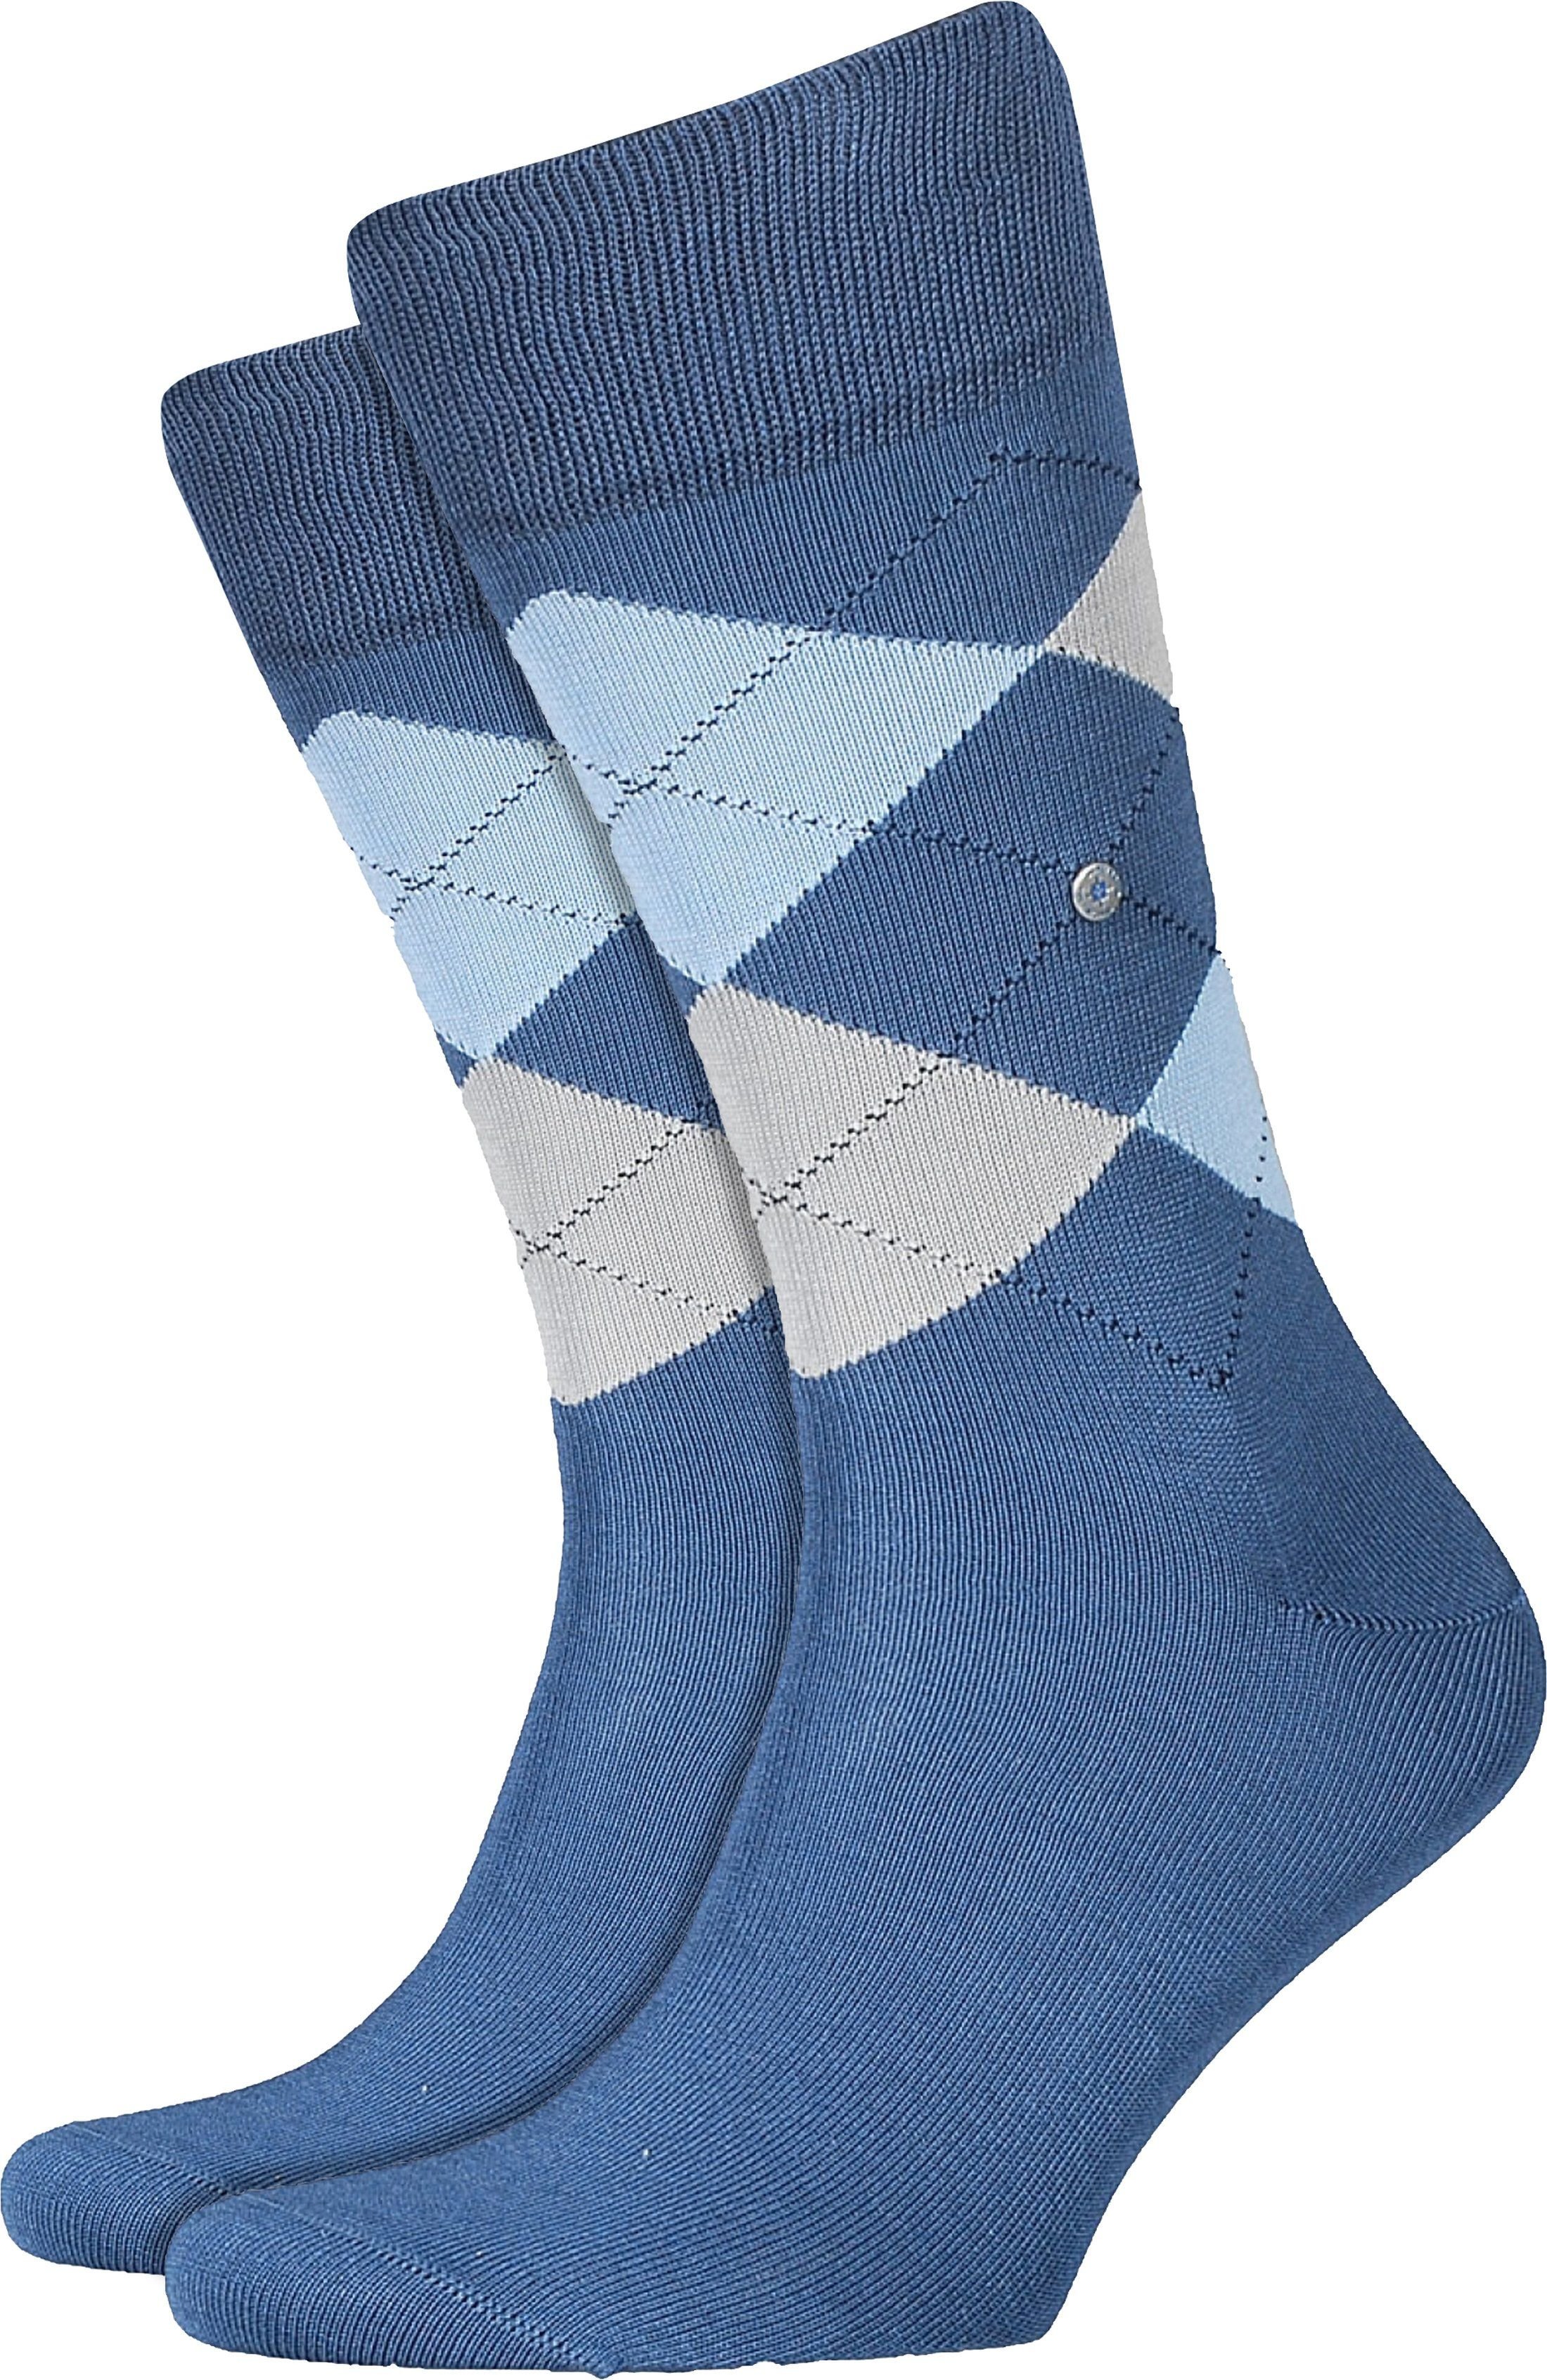 Burlington Socks Checkered Cotton 6220 Blue size 40-46